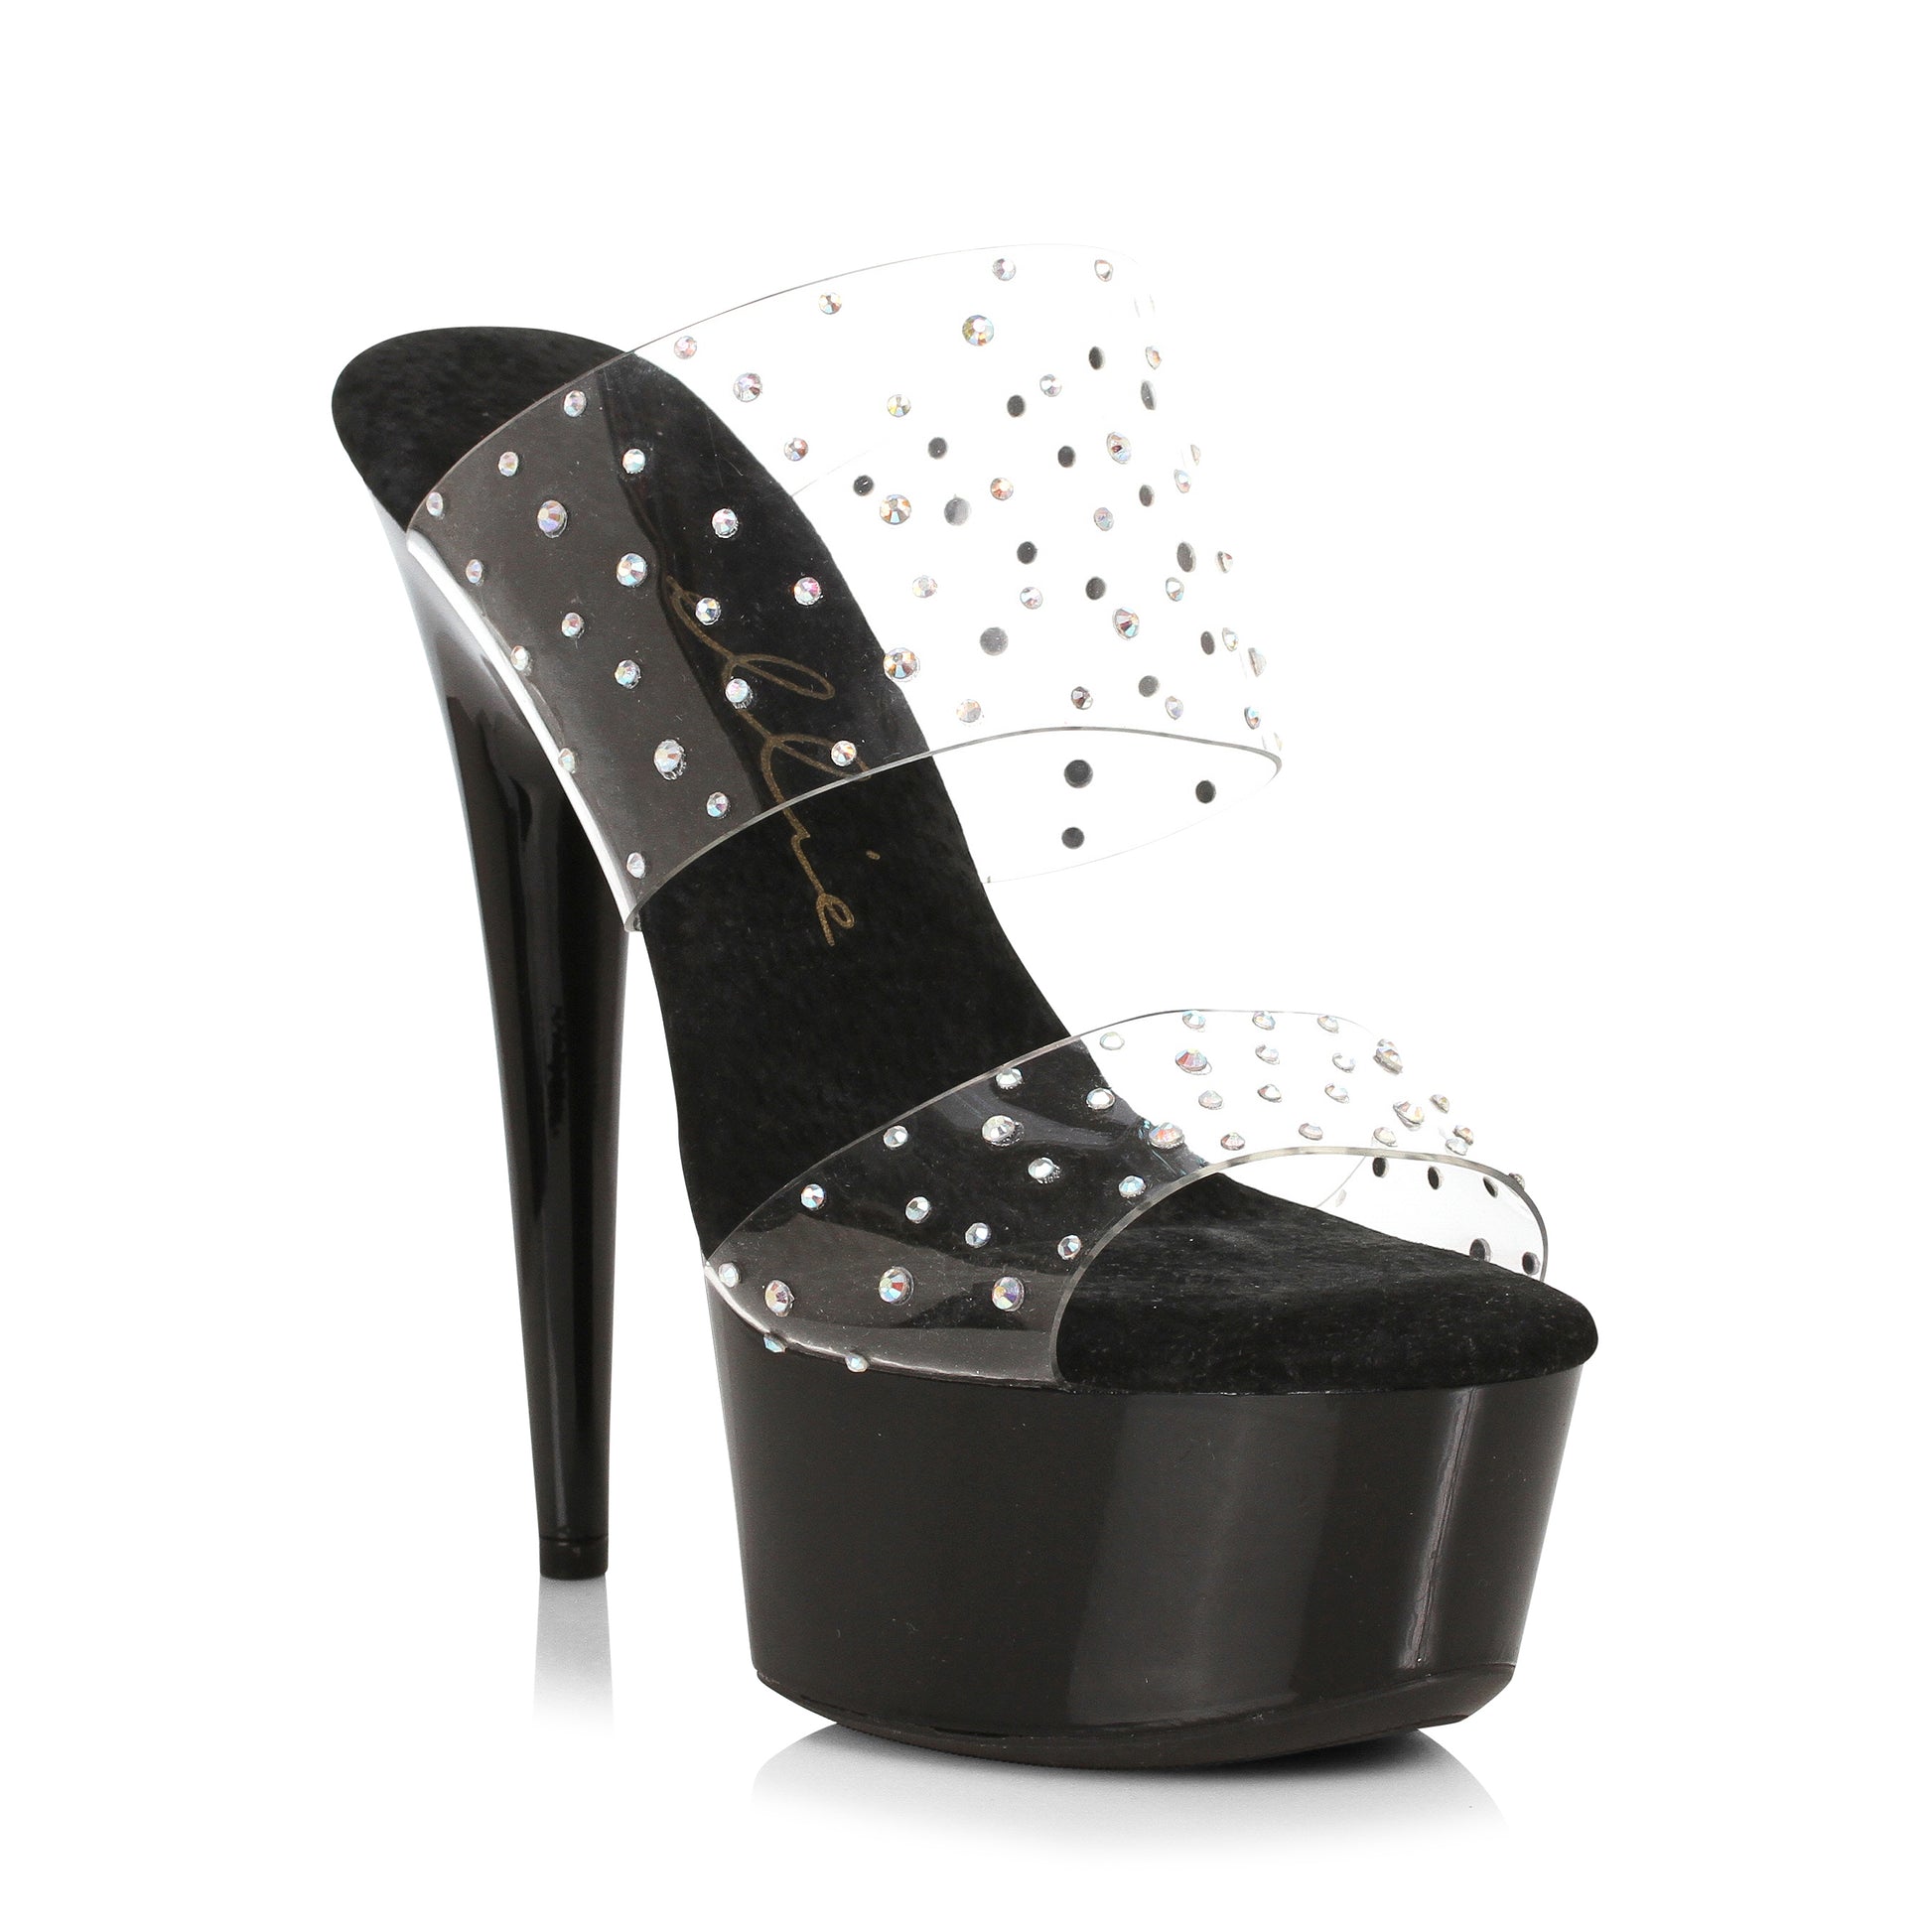 609-MISTY Ellie Shoes 6" Heel Clear Sandal With Rhinestone Upper 6 INCH HEEL